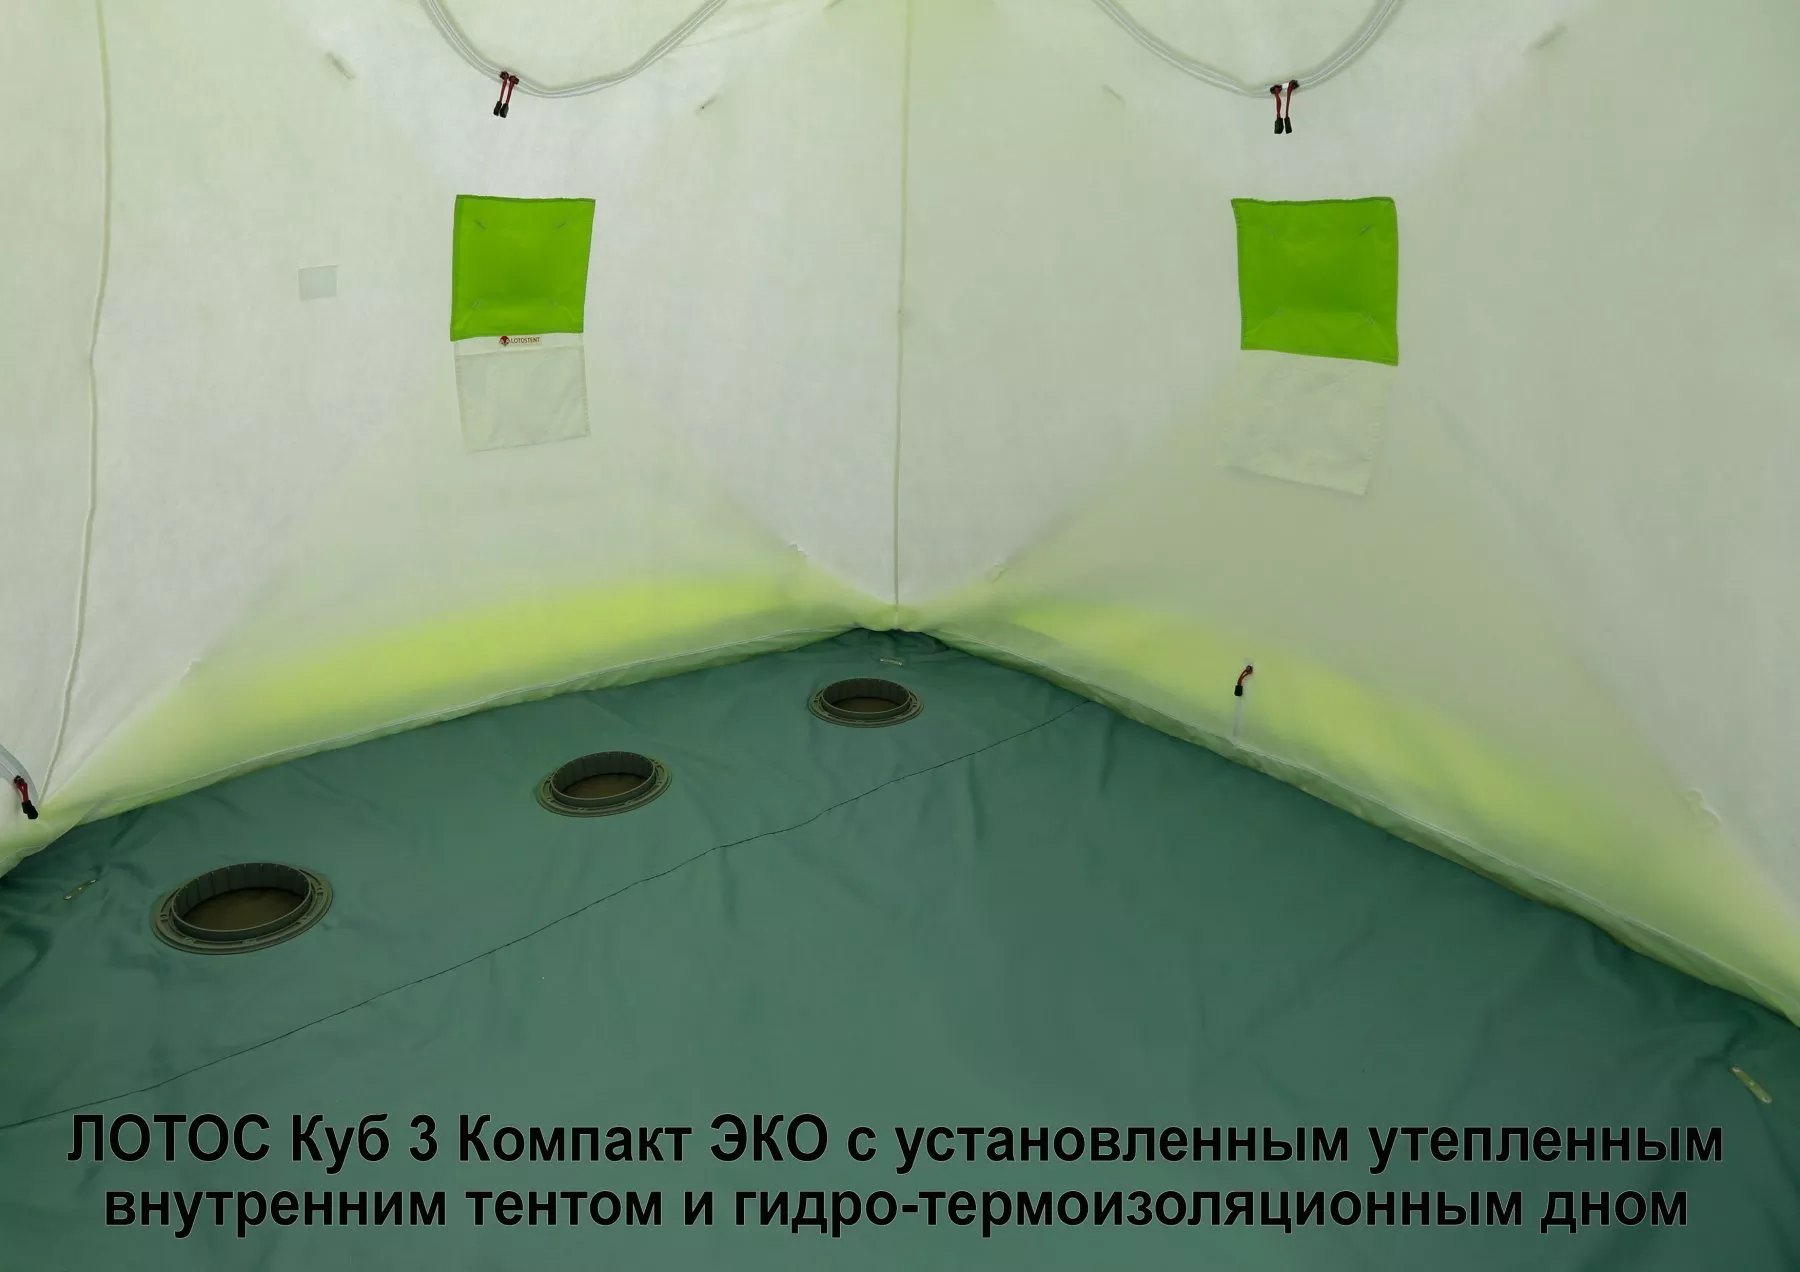 Зимняя палатка ЛОТОС Куб 3 Компакт ЭКО (гидро-термоизоляционное дно и внутренний тент)